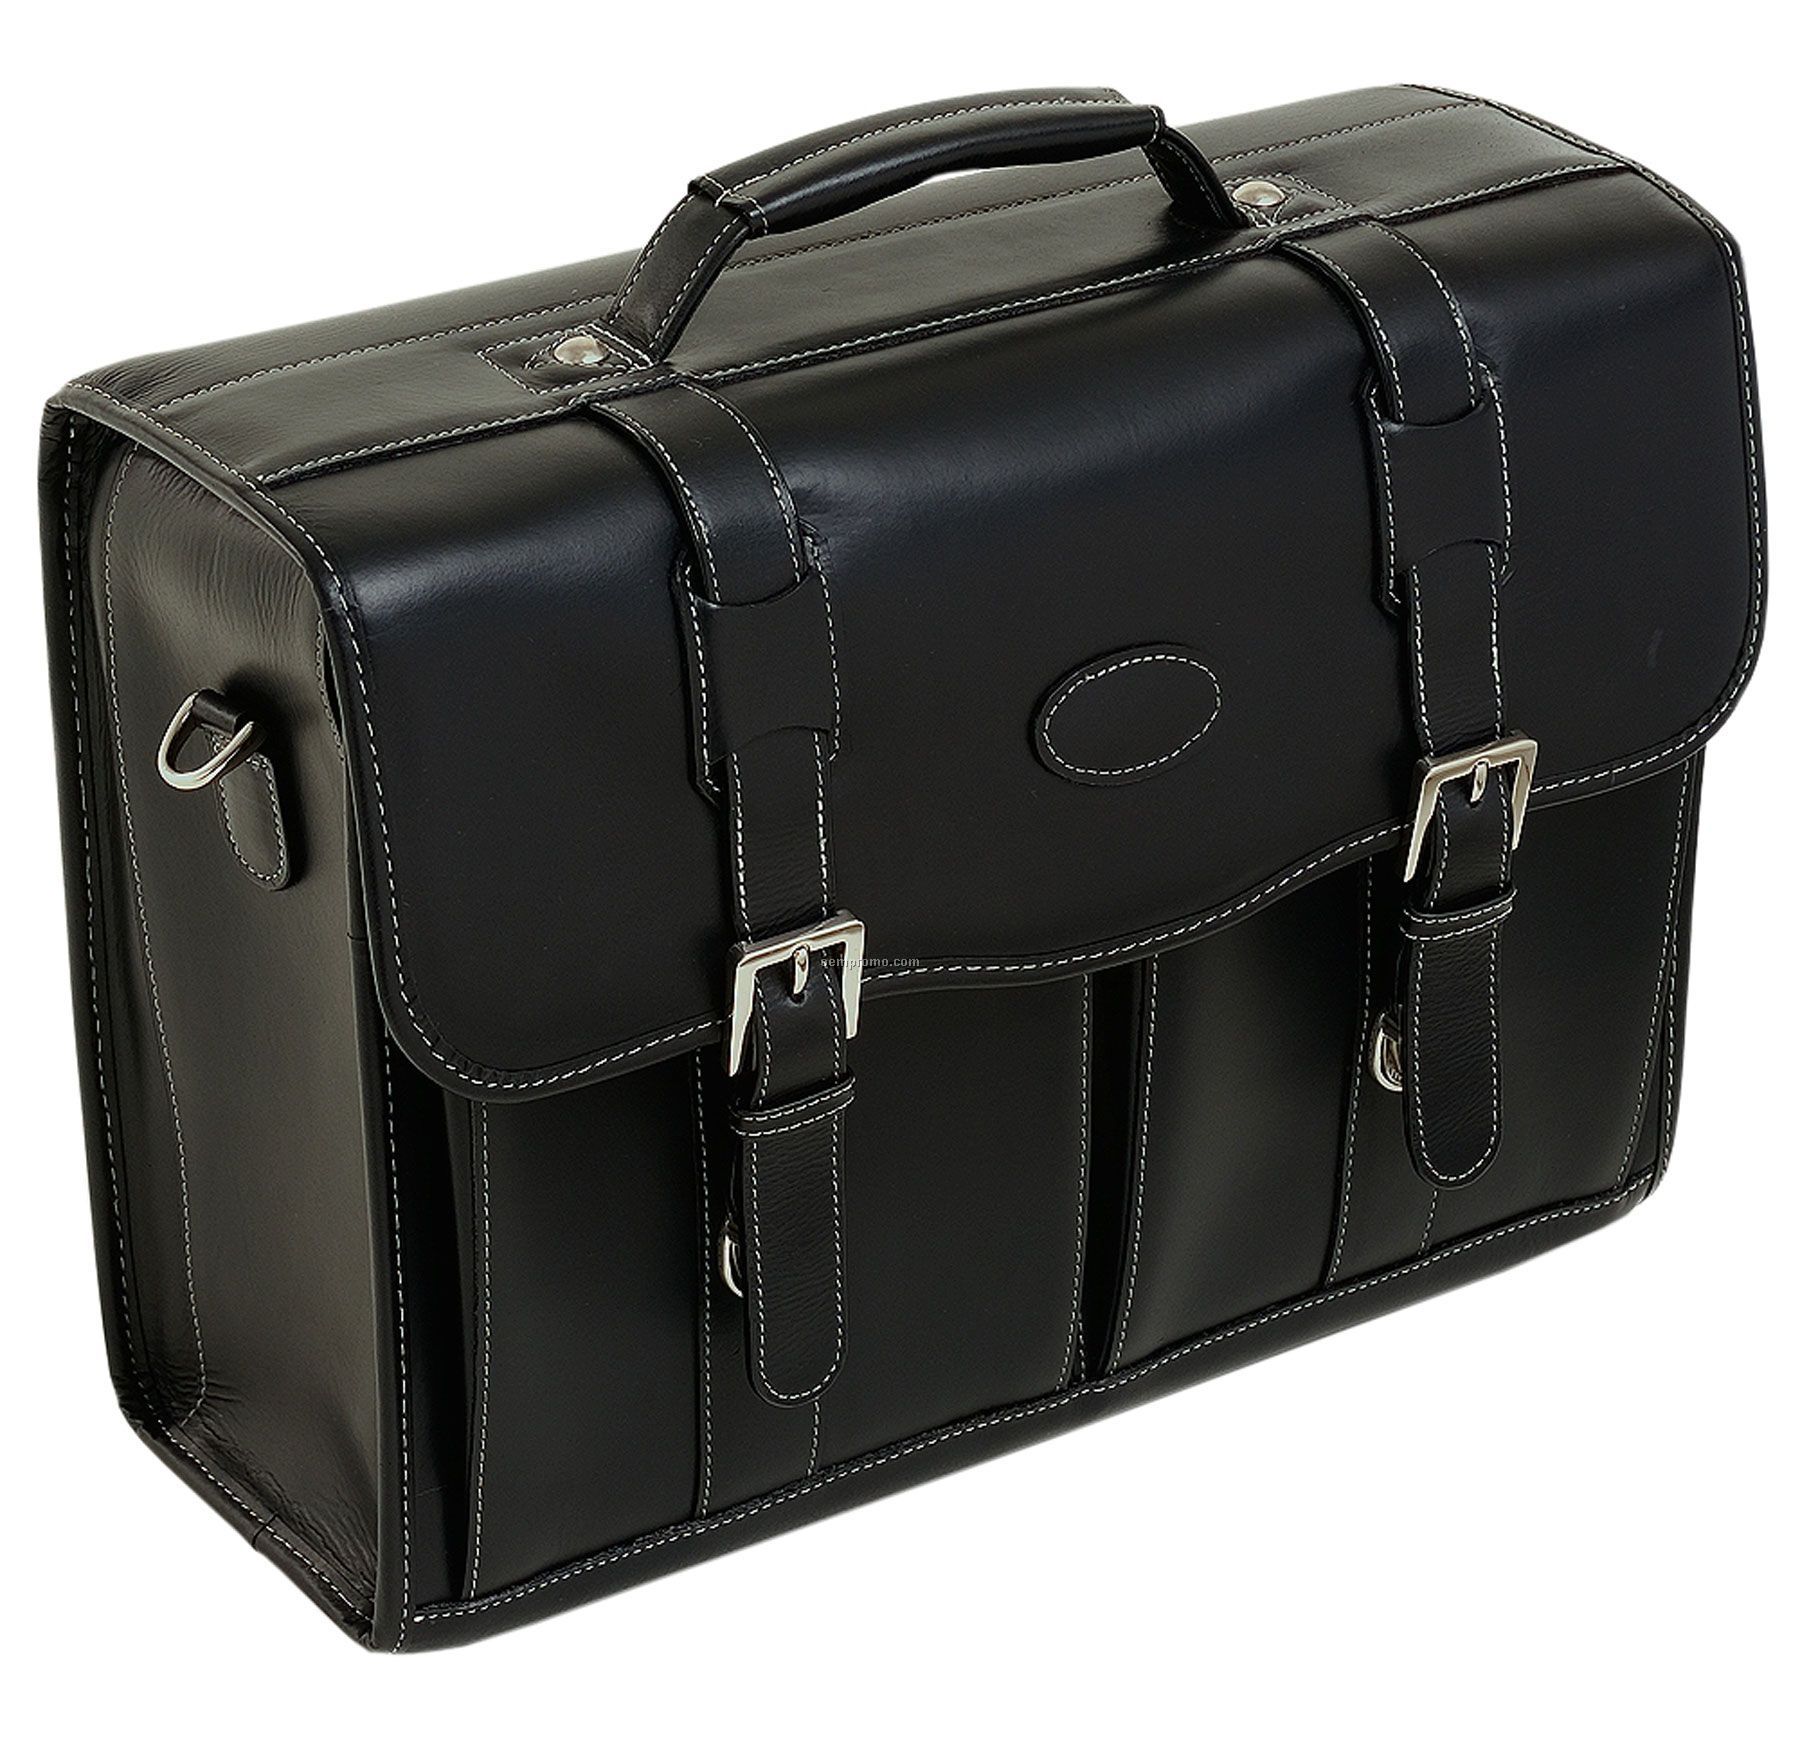 Rollandi Leather Laptop Case - Black